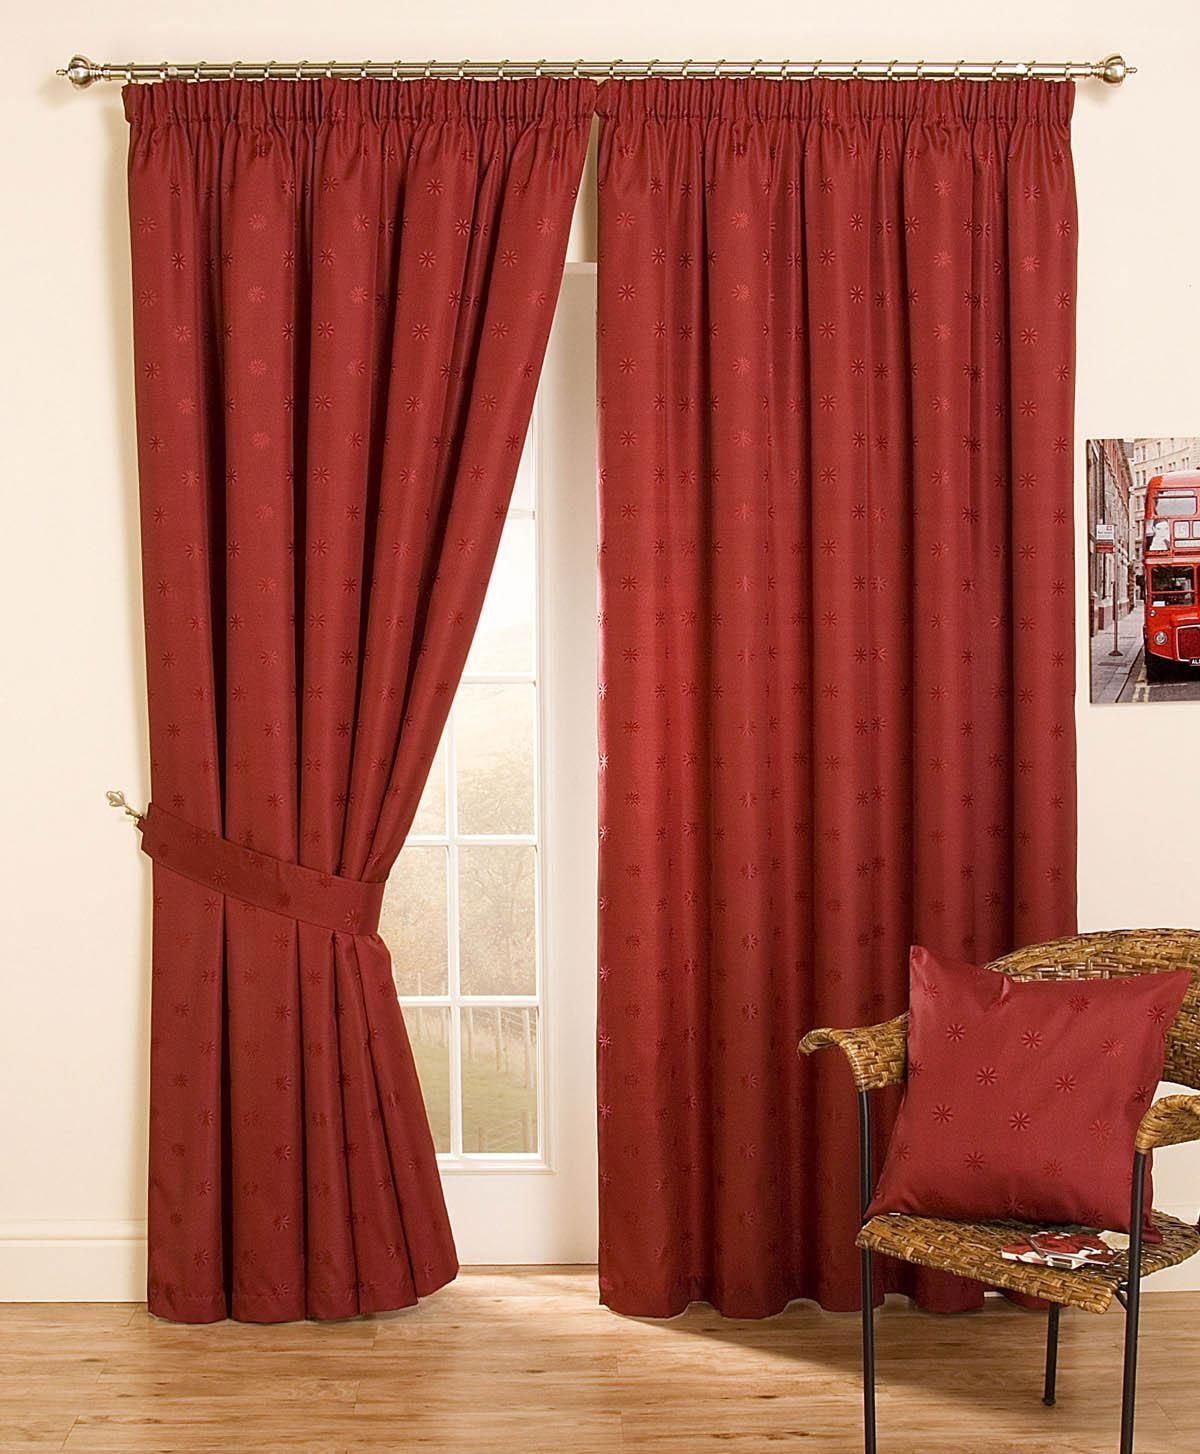 15 Best Ideas Ready Made Curtains for Large Bay Windows | Curtain Ideas